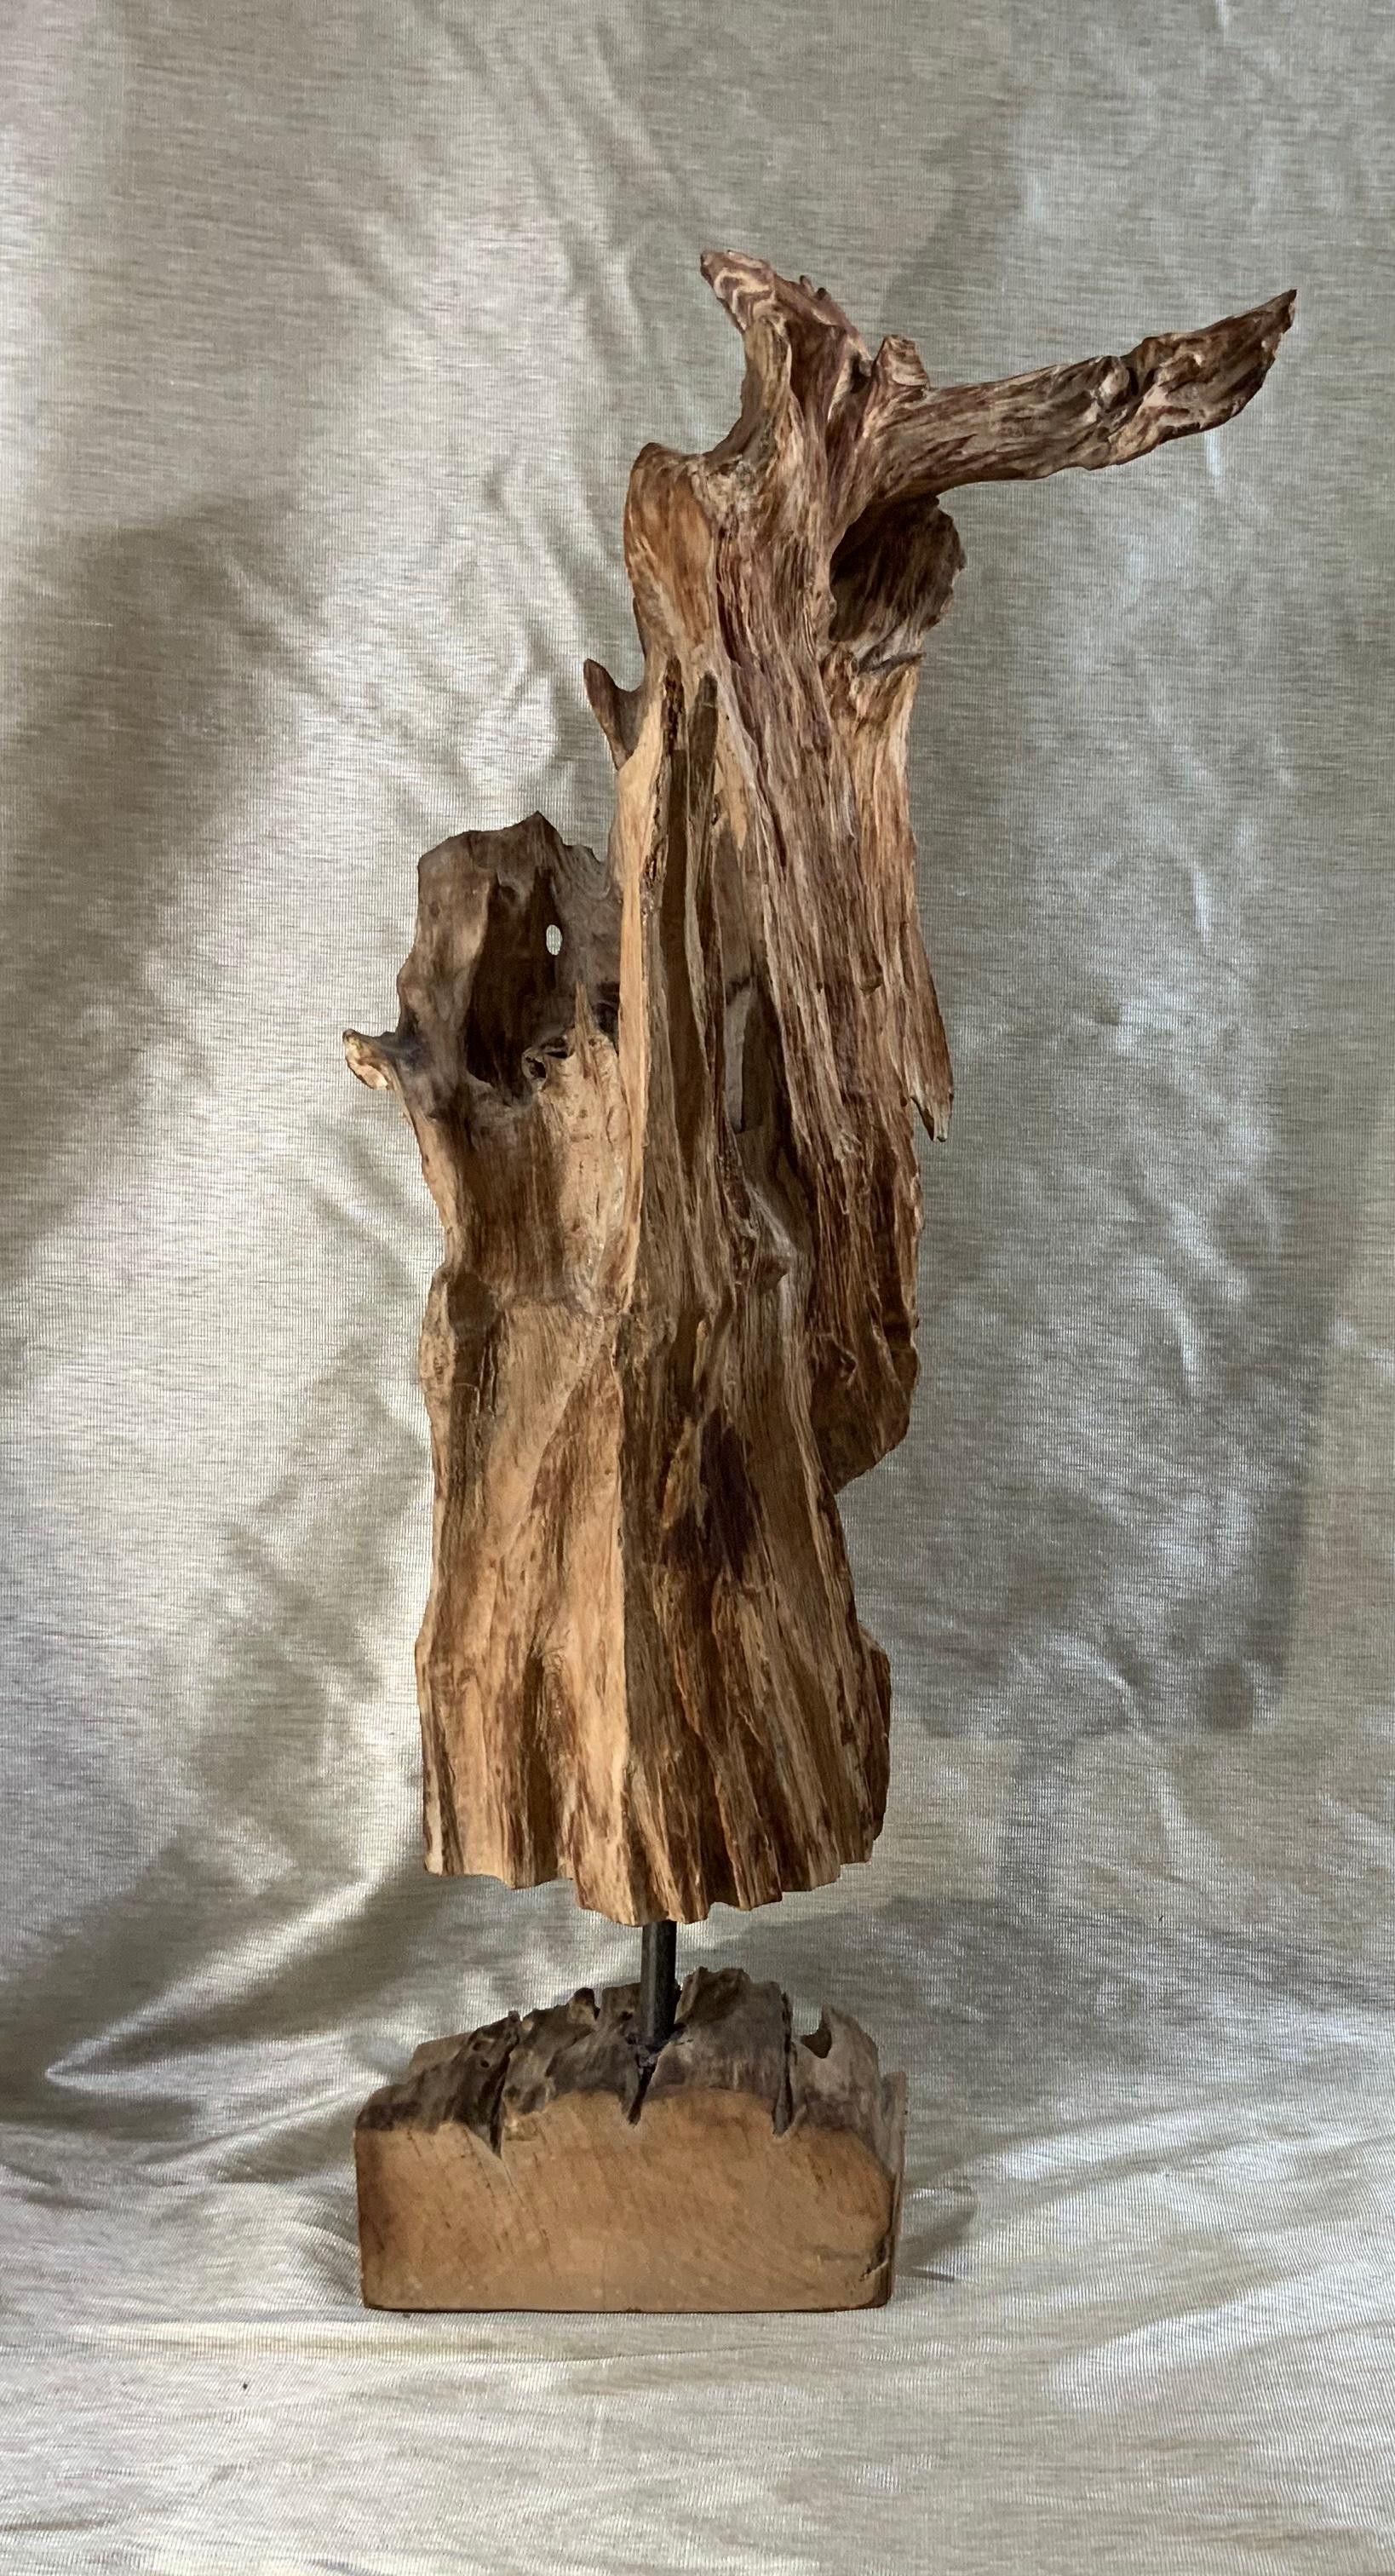 driftwood sculpture for sale